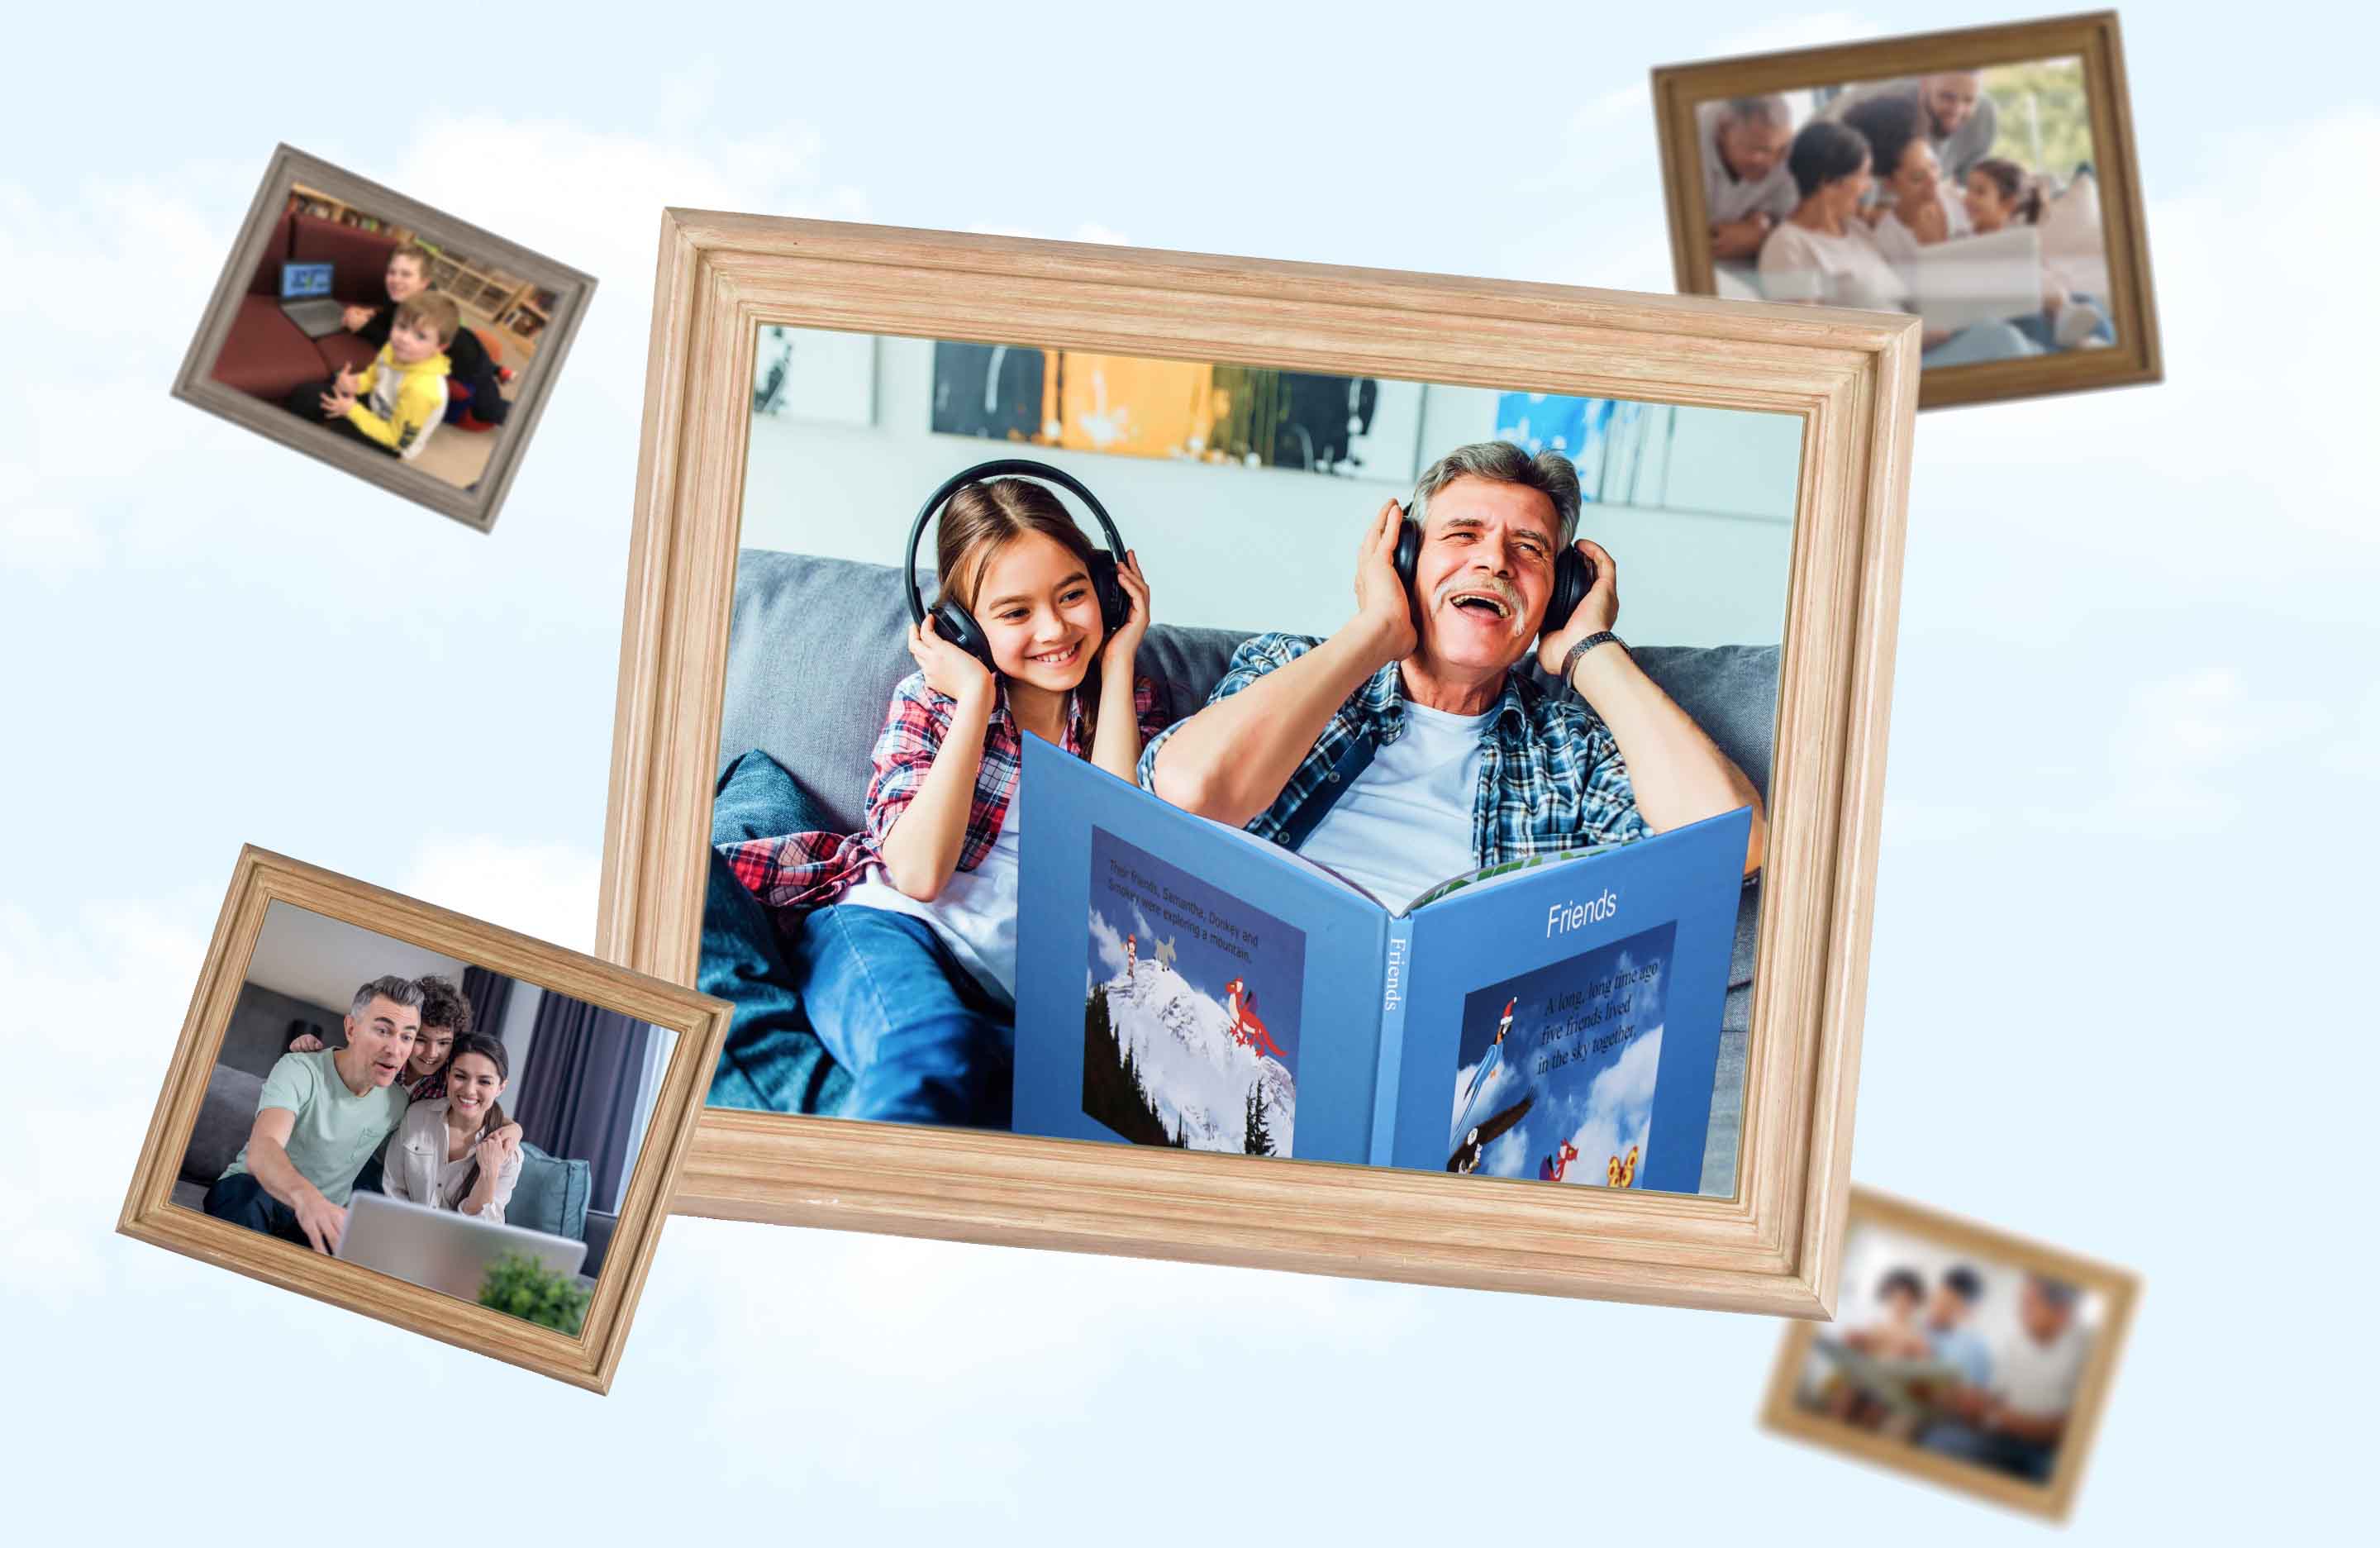 Families enjoying sharing StoryJumper books together